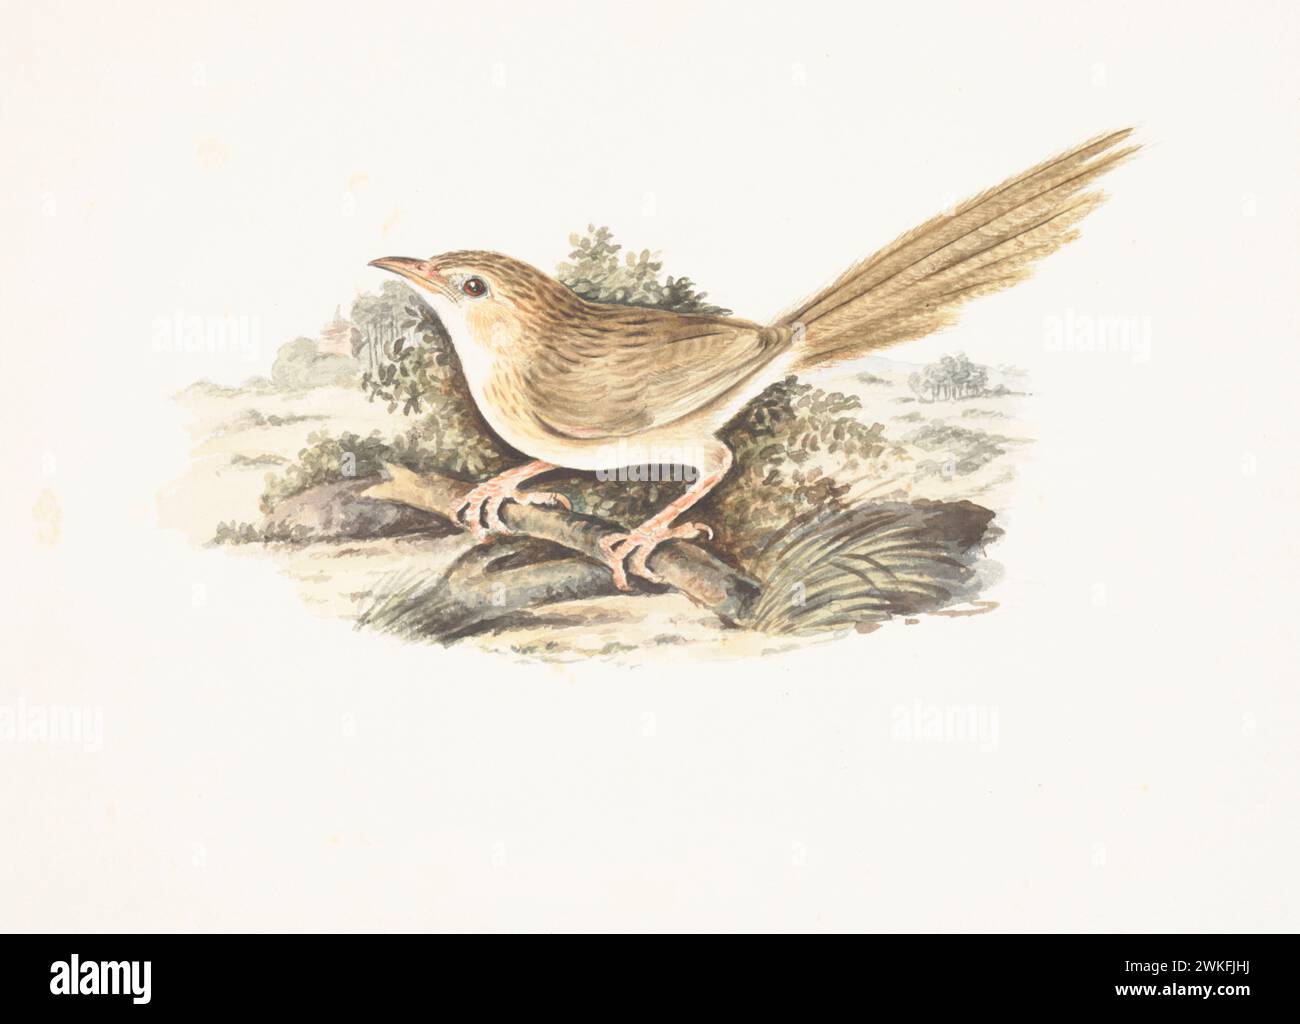 Common babbler (Argya caudata) by Gwillim Elizabeth in 1801 Stock Photo